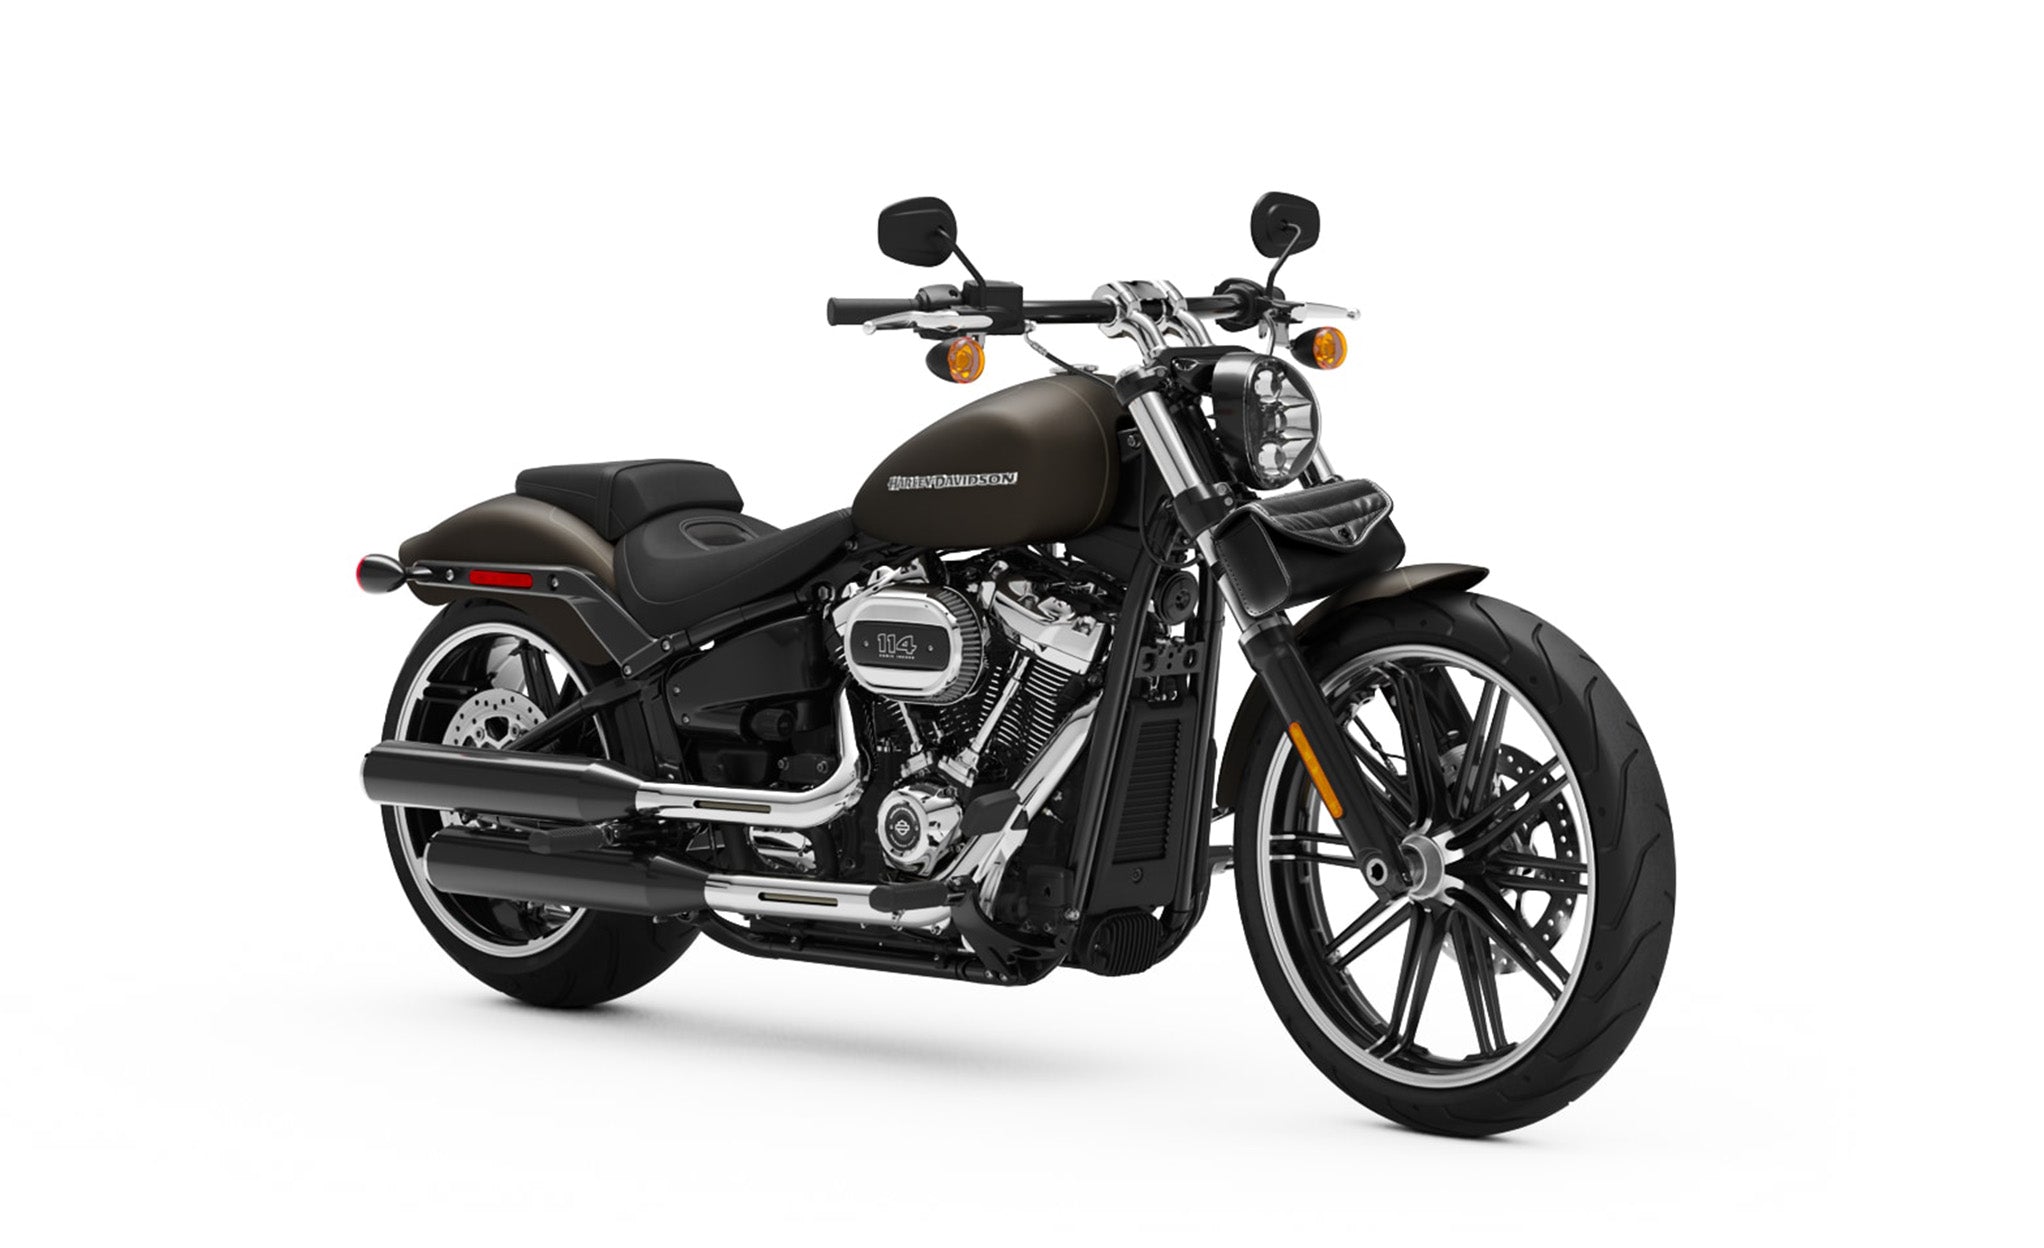 Viking Iron Born Horizontal Stitch Leather Motorcycle Tool Bag for Harley Davidson Bag on Bike View @expand